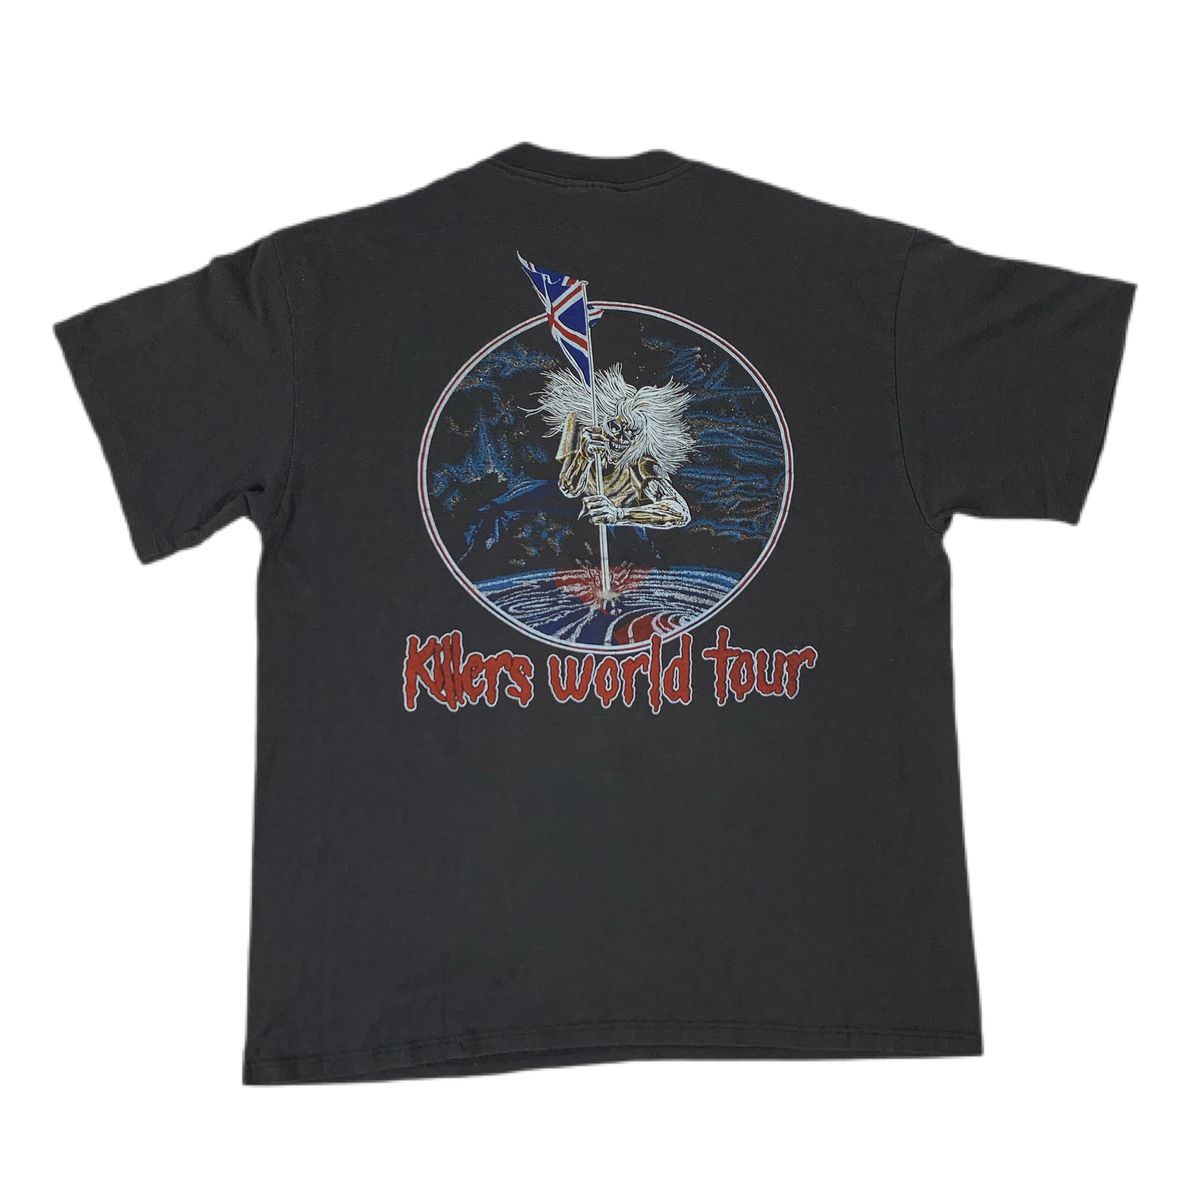 Vintage Iron Maiden “Killers World Tour” T-Shirt